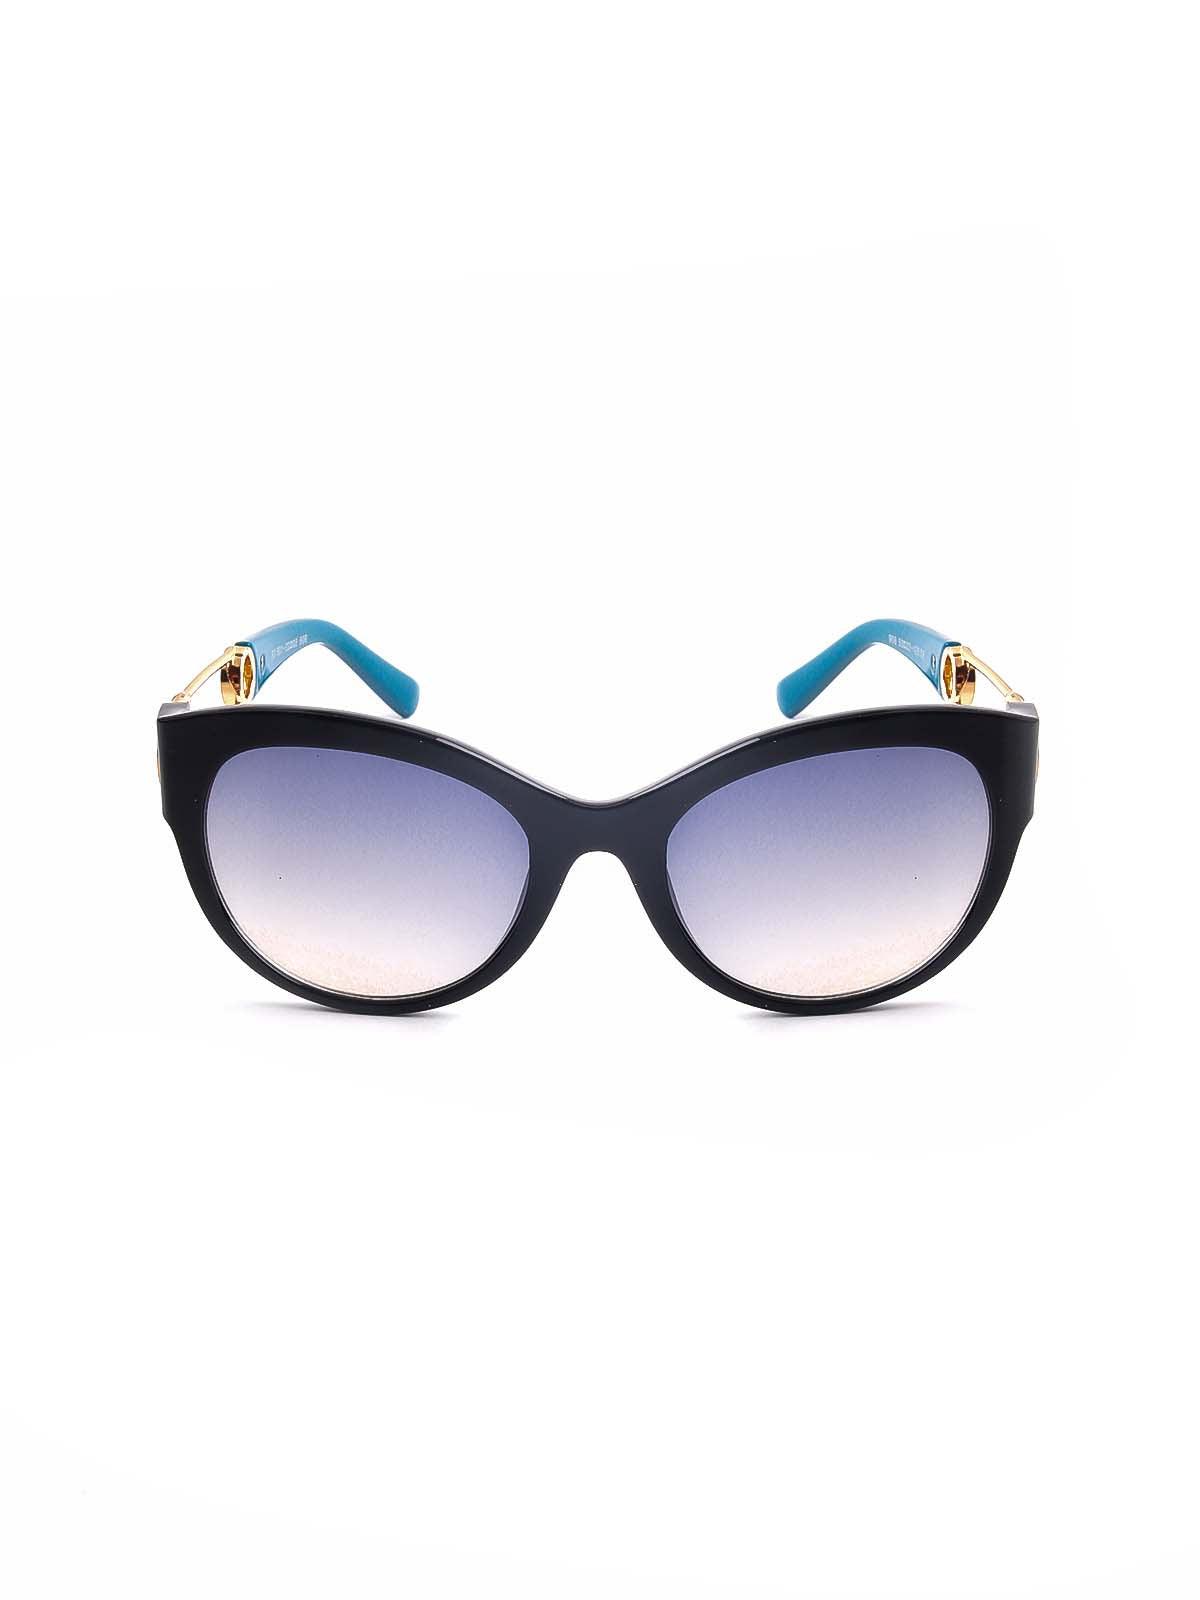 Odette Women Black Frame Classic Flared Sunglasses